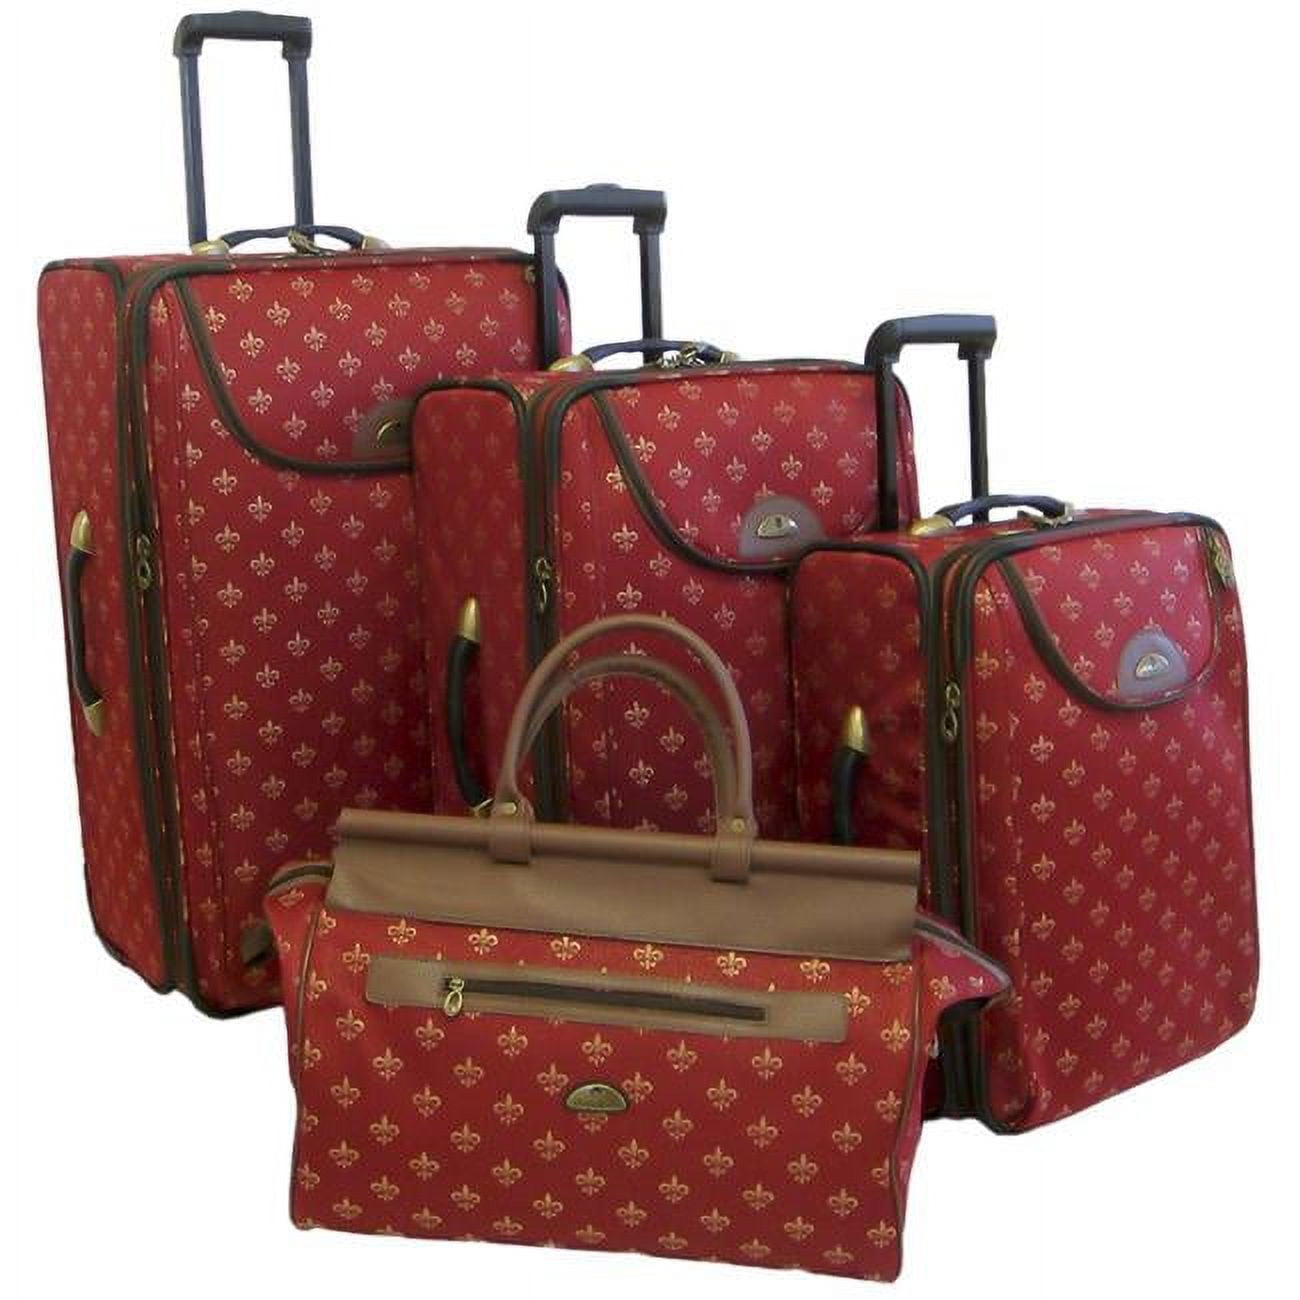 American Flyer Fleur De Lis Fabric 4 Piece Luggage Set in Brown